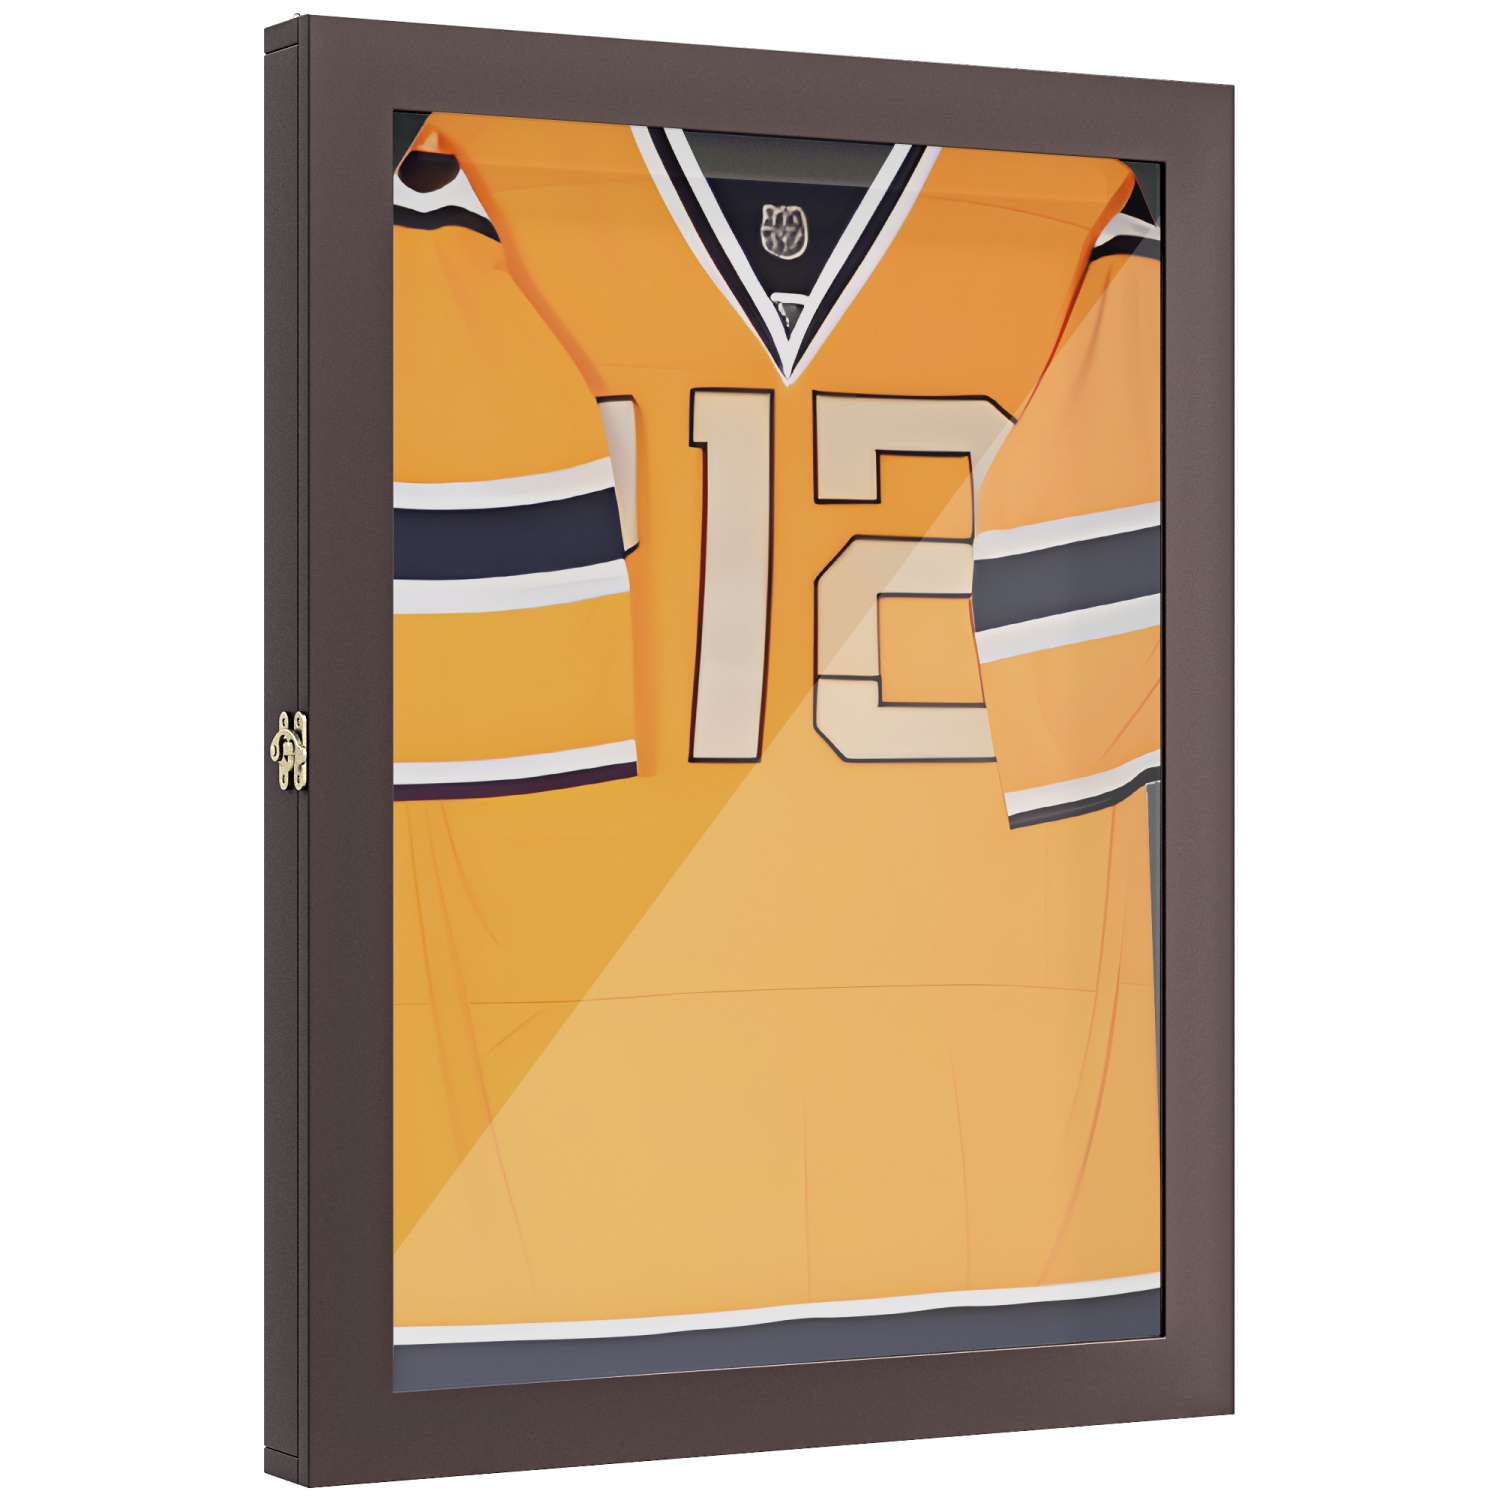 HOMCOM Jersey Display Frame Case, Acrylic Sports Shirt Shadow Box for Basketball Football Baseball, 28" x 35", Brown